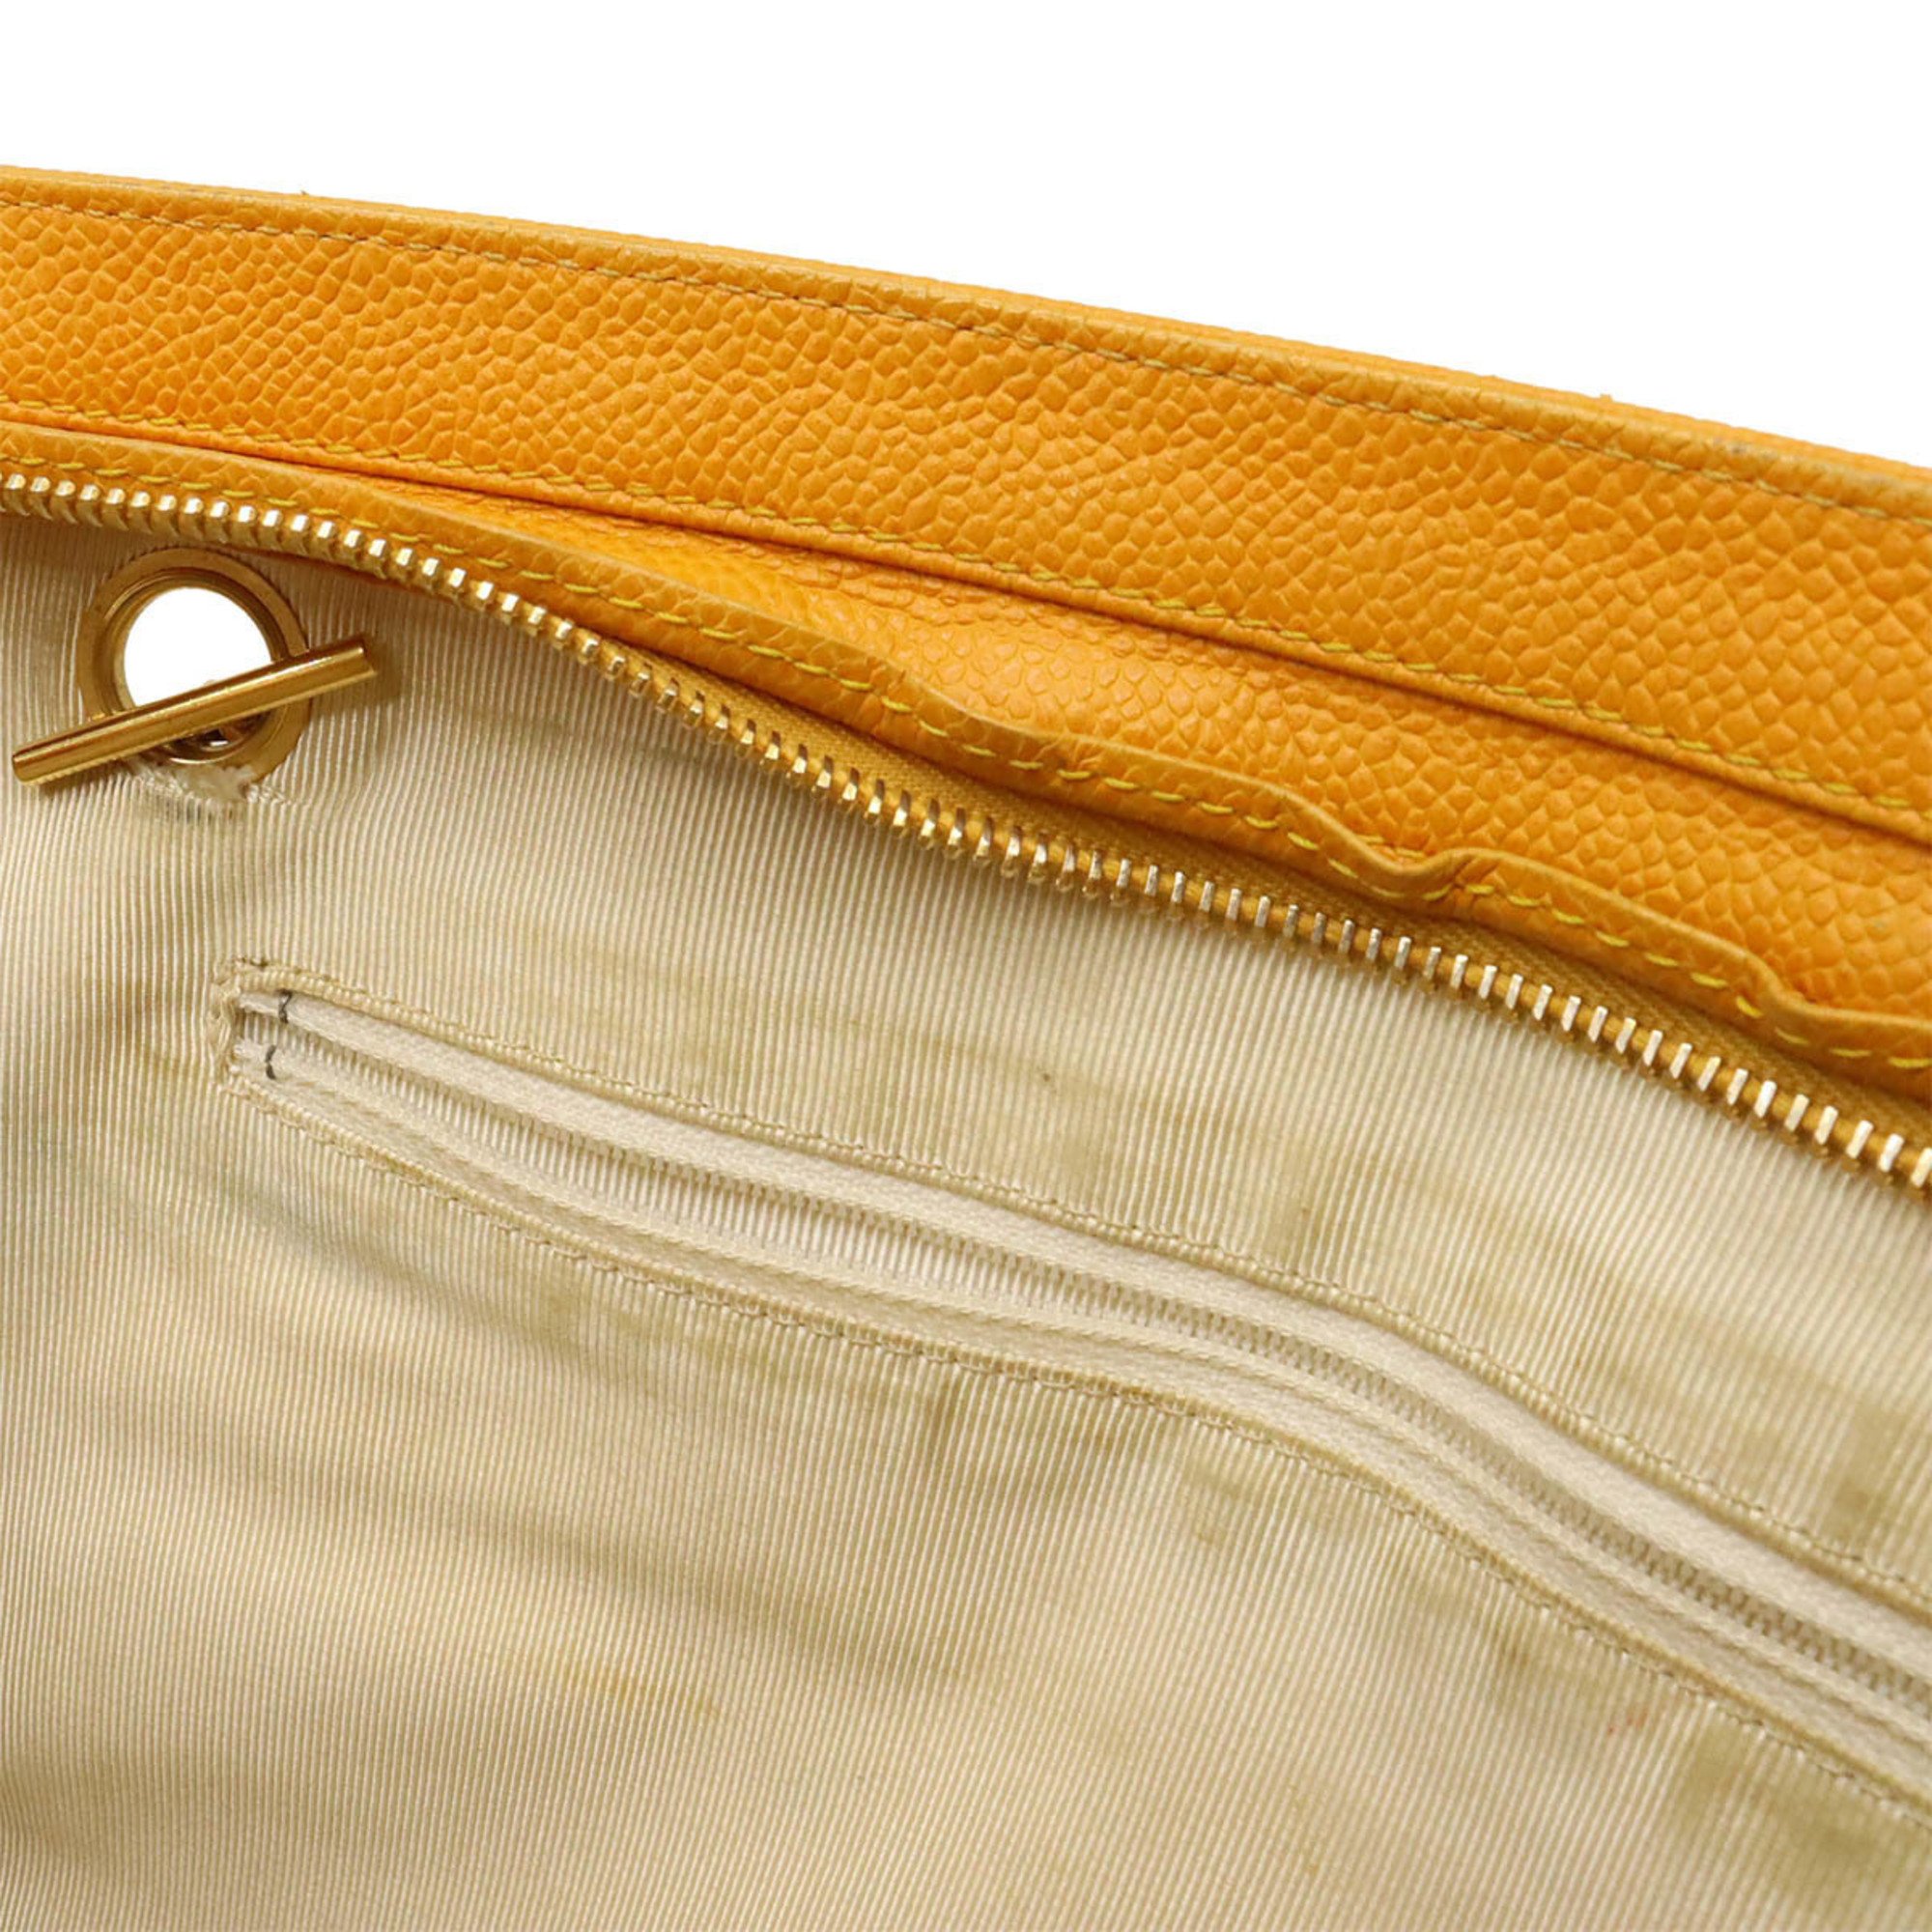 CHANEL Coco Mark Triple Chain Shoulder Bag Tote Caviar Skin Leather Yellow